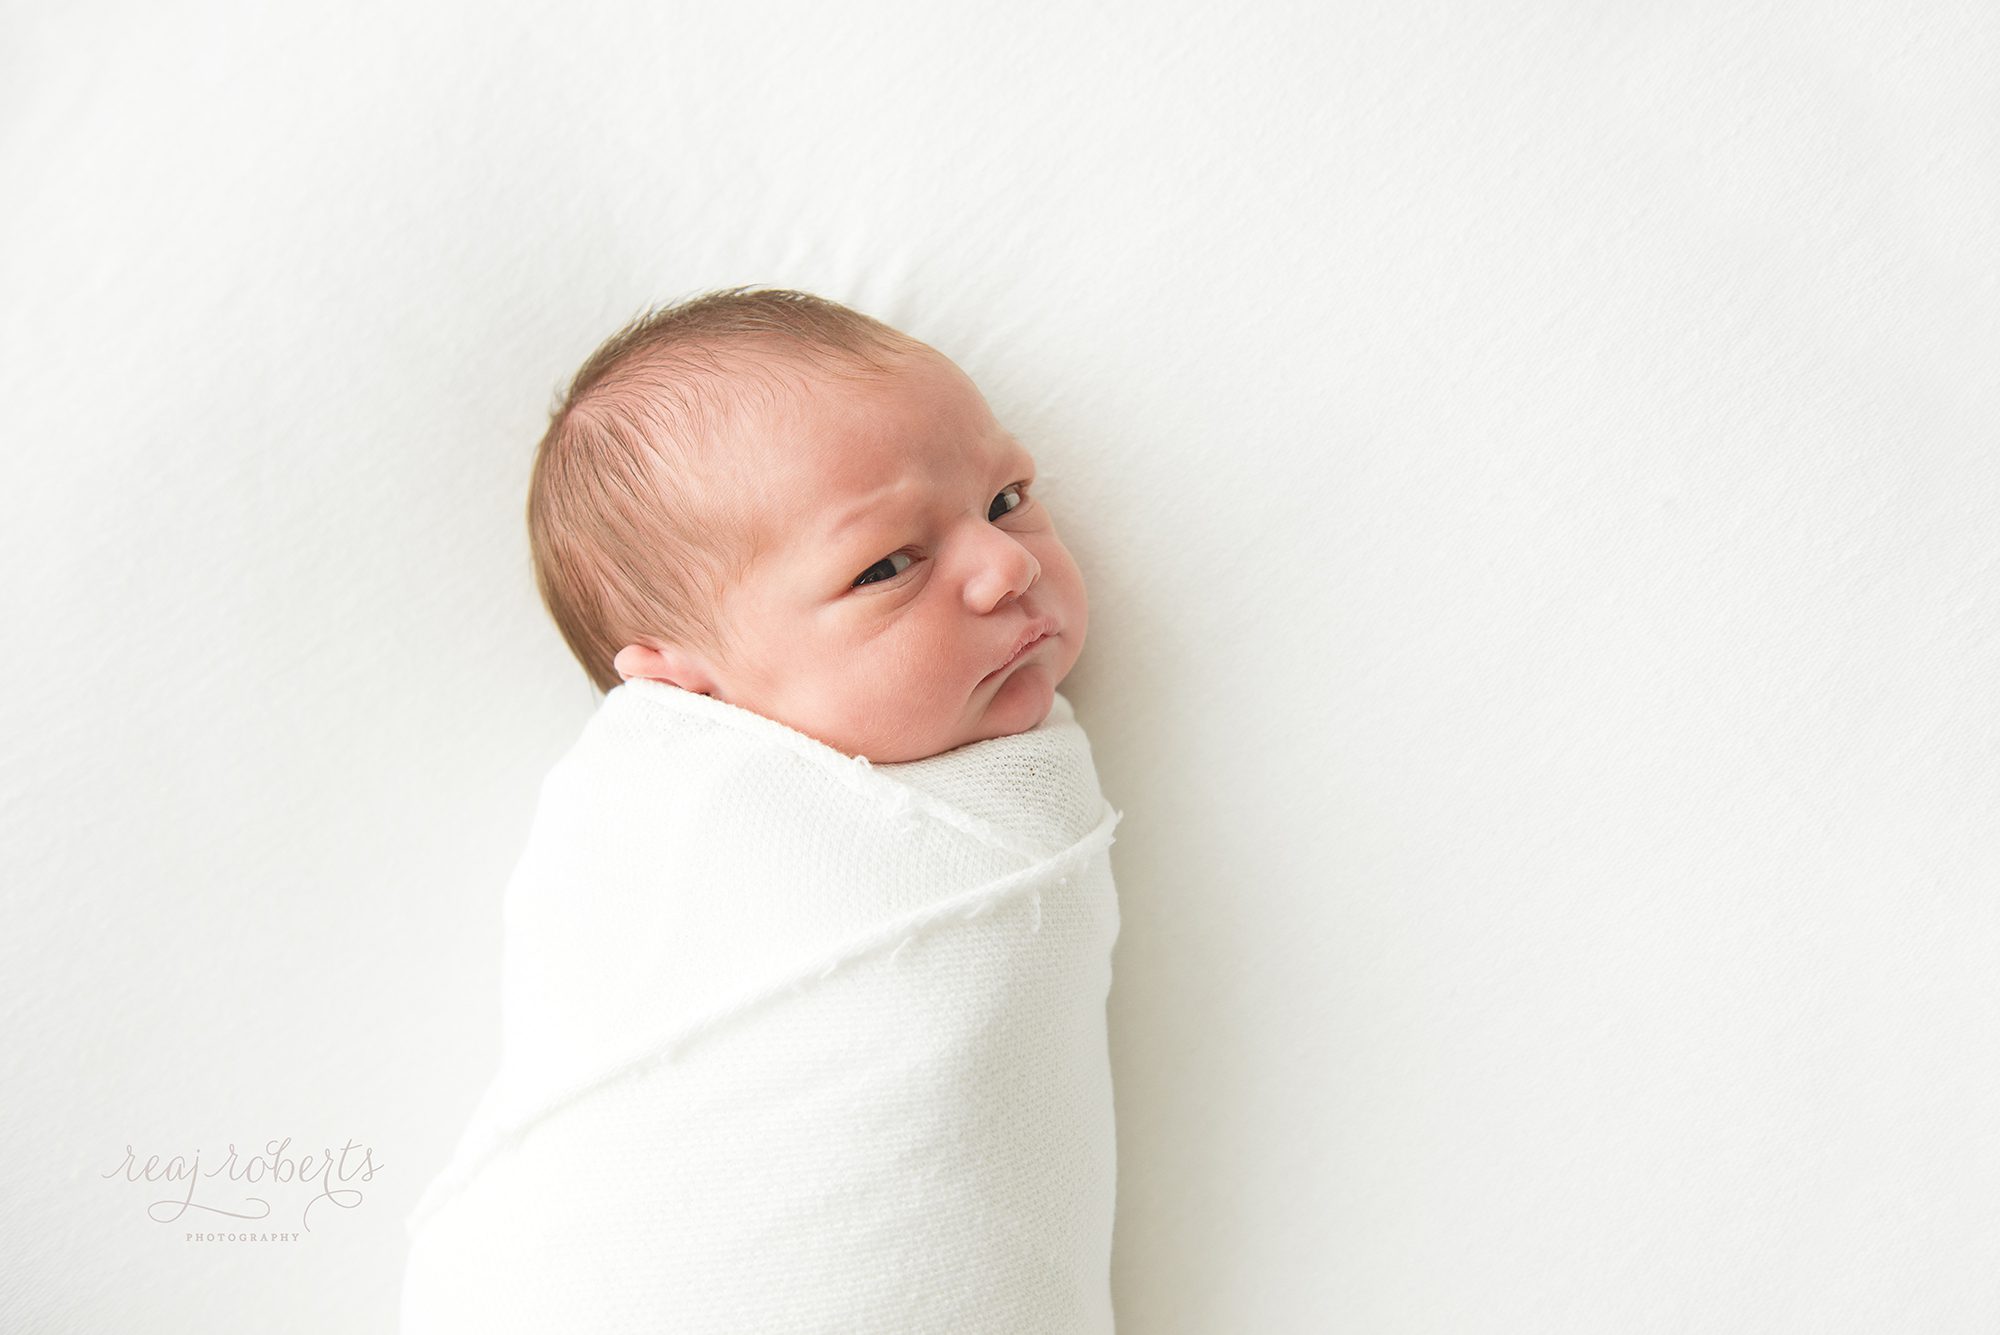 Organic Luxury Newborn Baby Photography | Reaj Roberts Photography